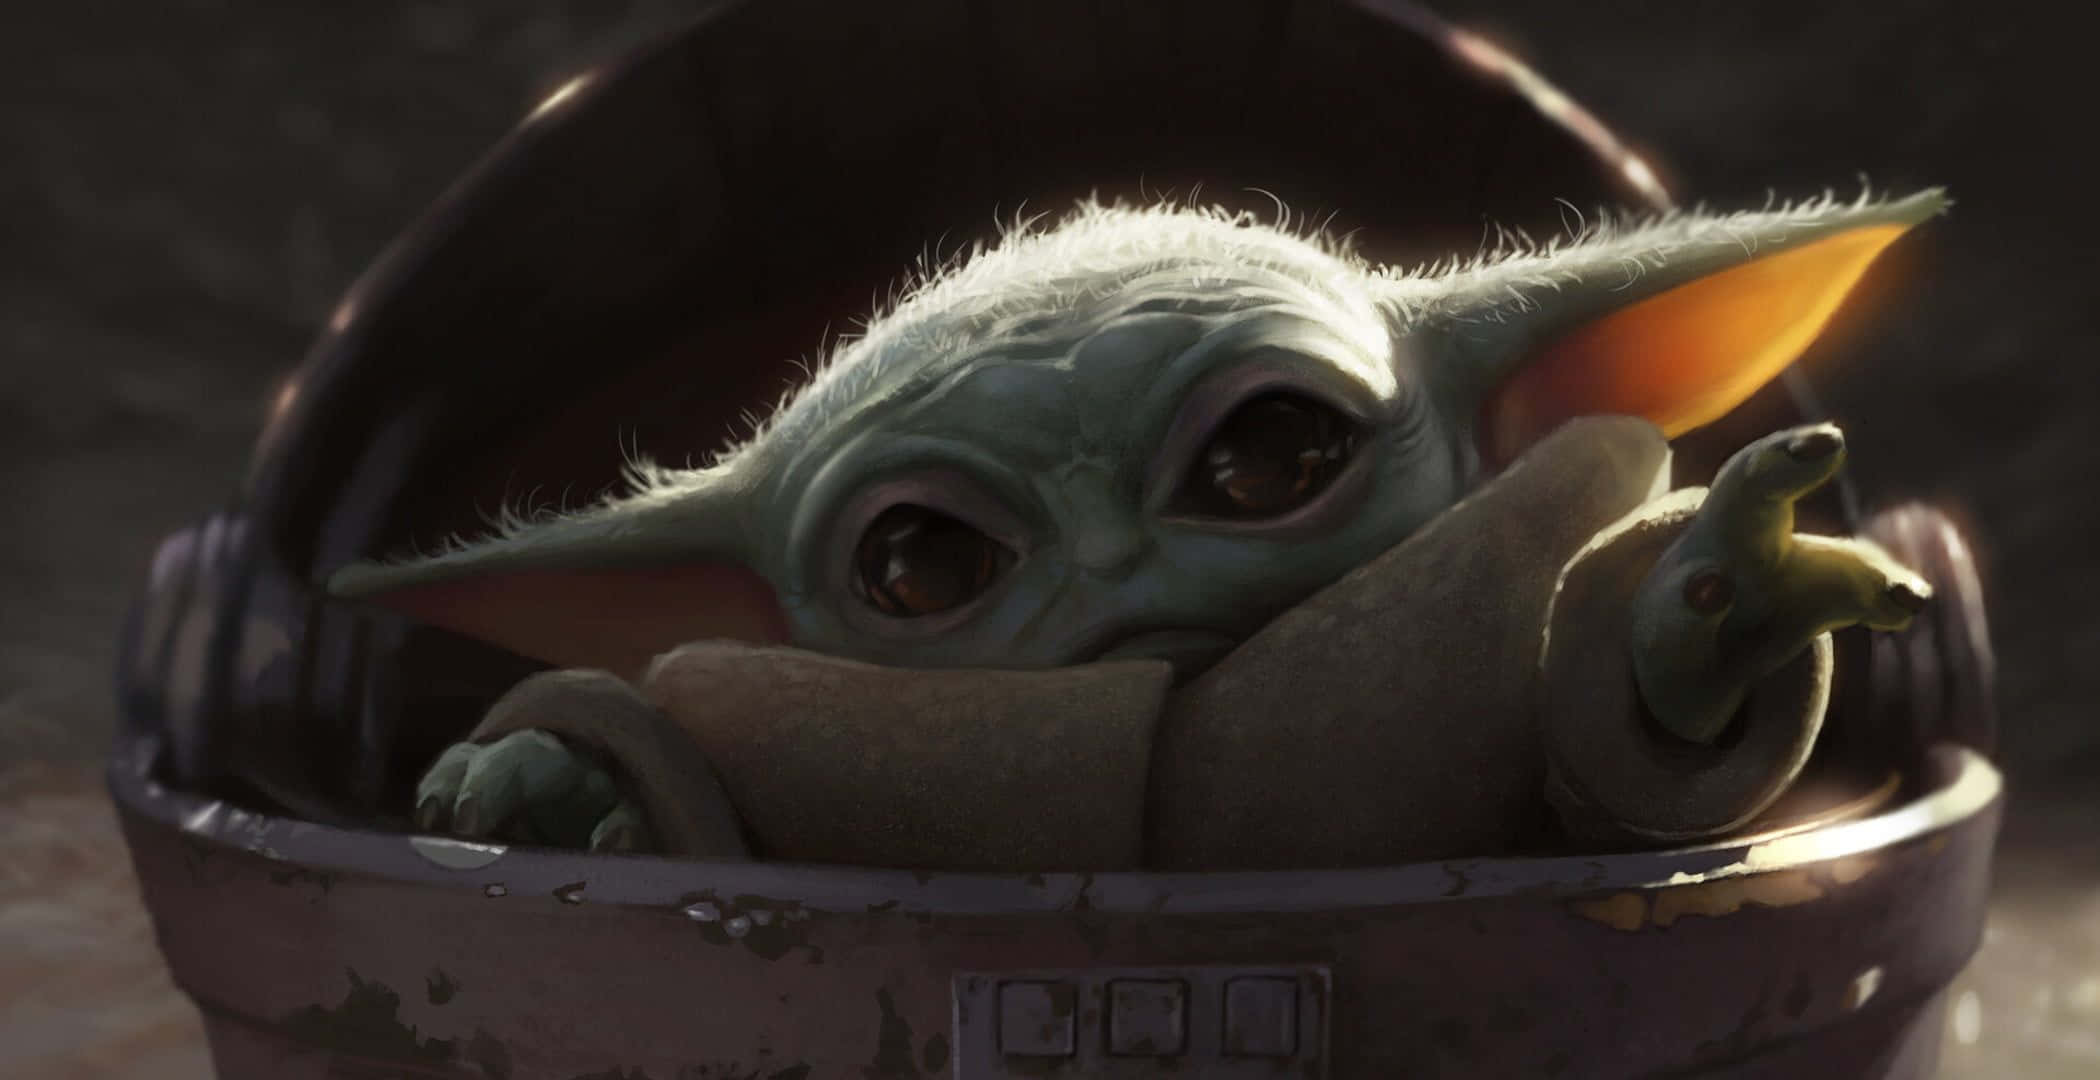 The cutest little green guy around, Baby Yoda